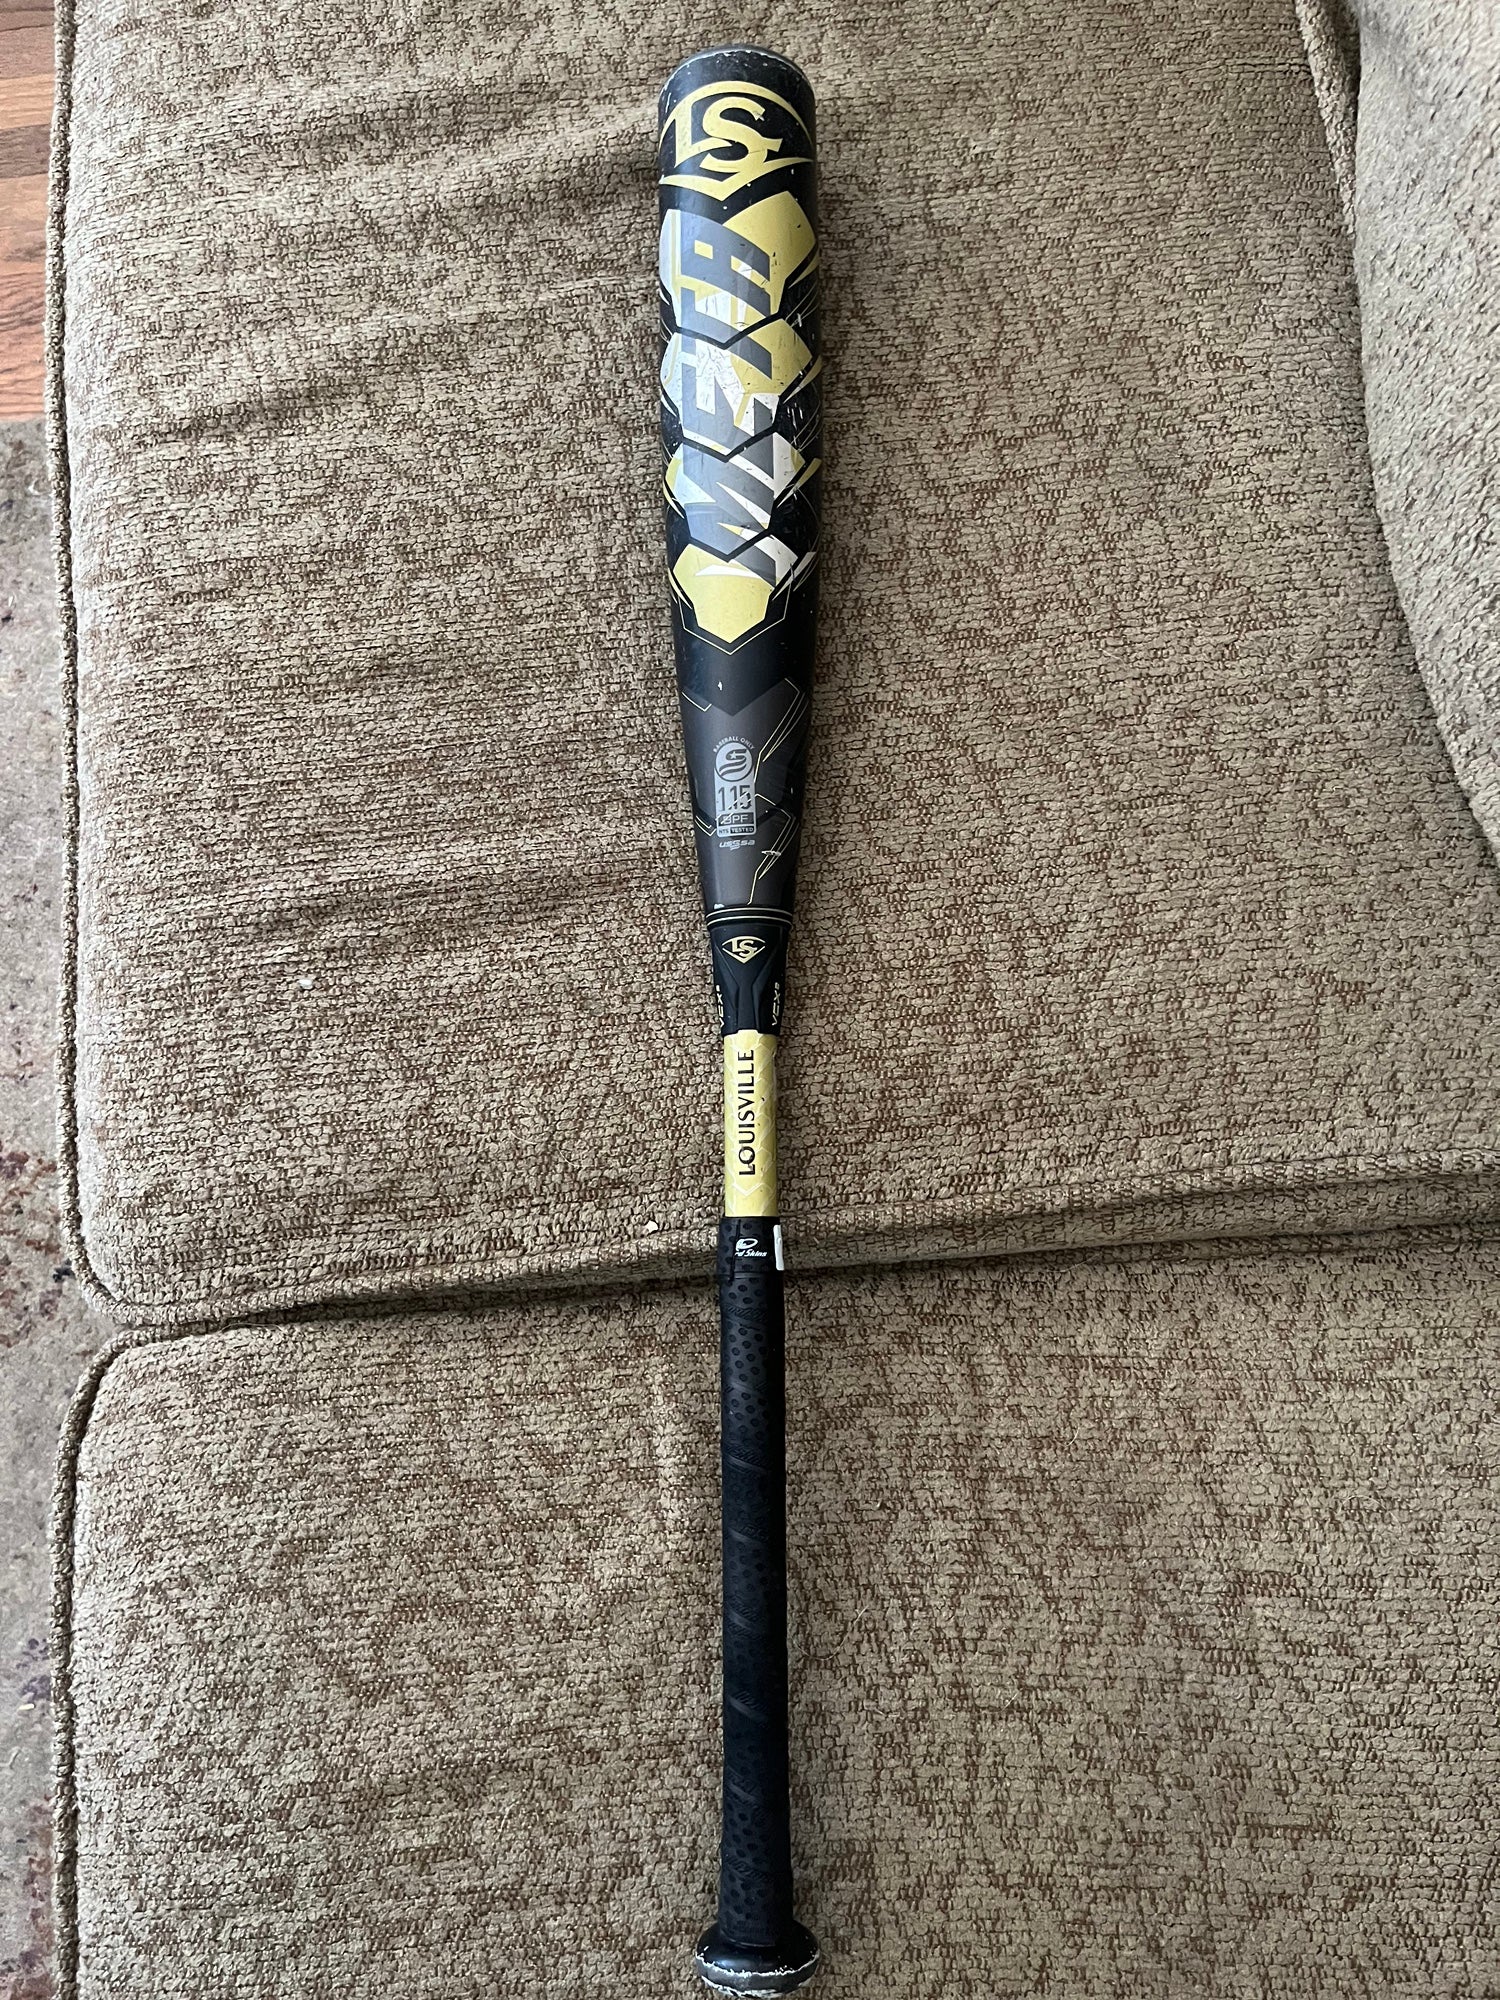 New Louisville Slugger Triton SLXT Senior League Baseball Bat Blue/Sil –  Premier Bats